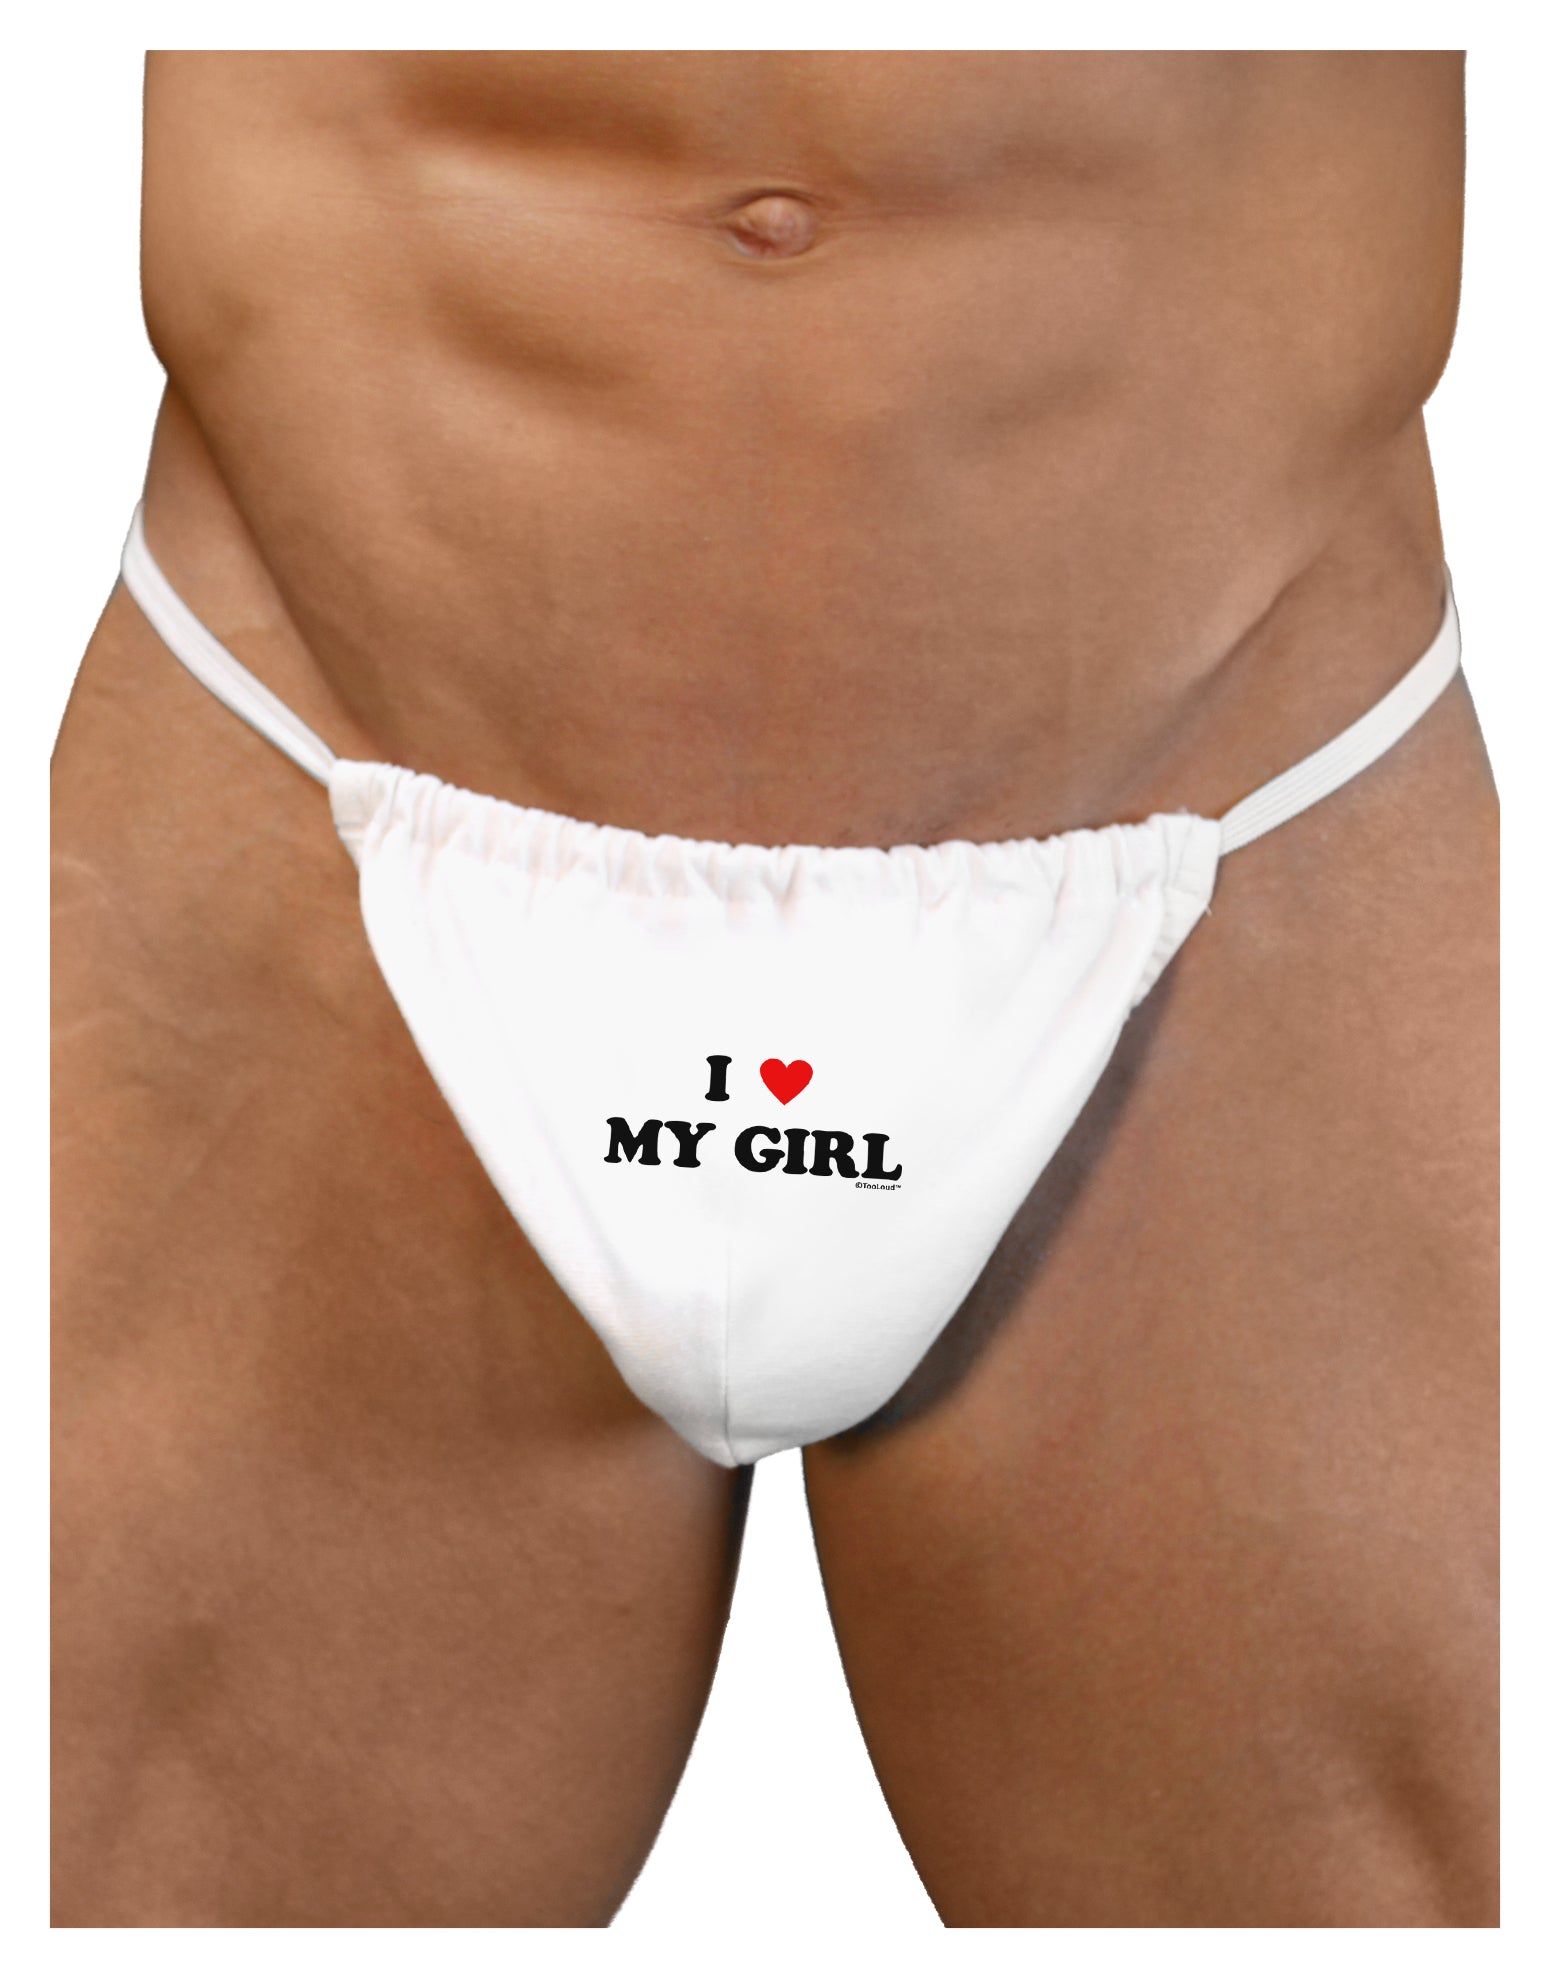 I Love My Girlfriend - Personalized Custom Men's Boxer Briefs